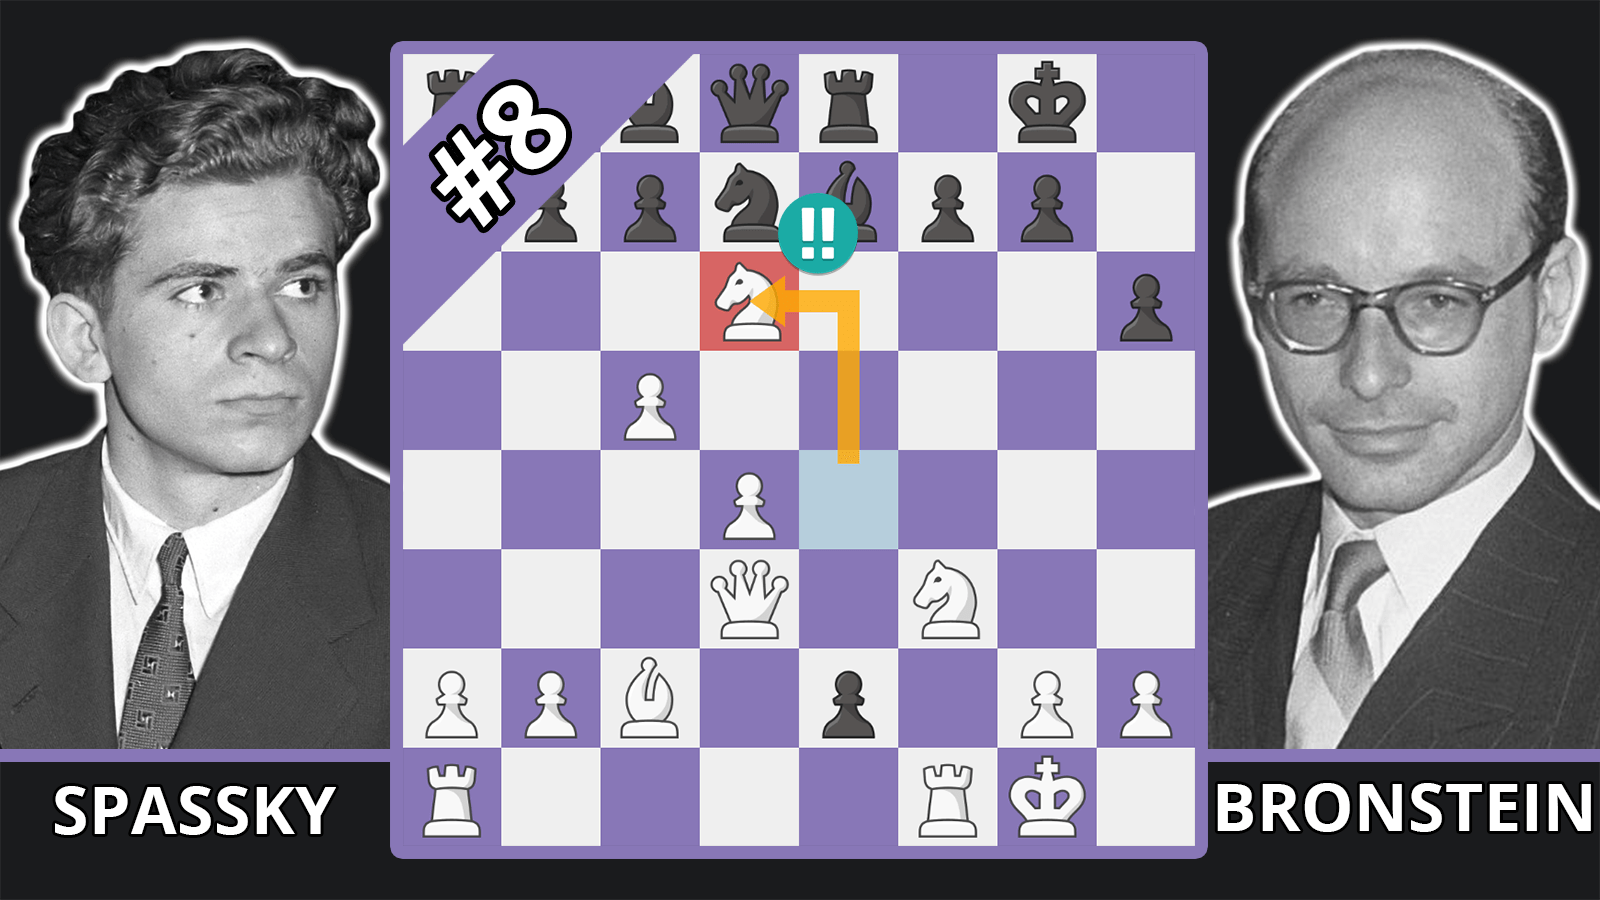 Spark Chess 11 2 6 ME vs Boris The most advance A.I 